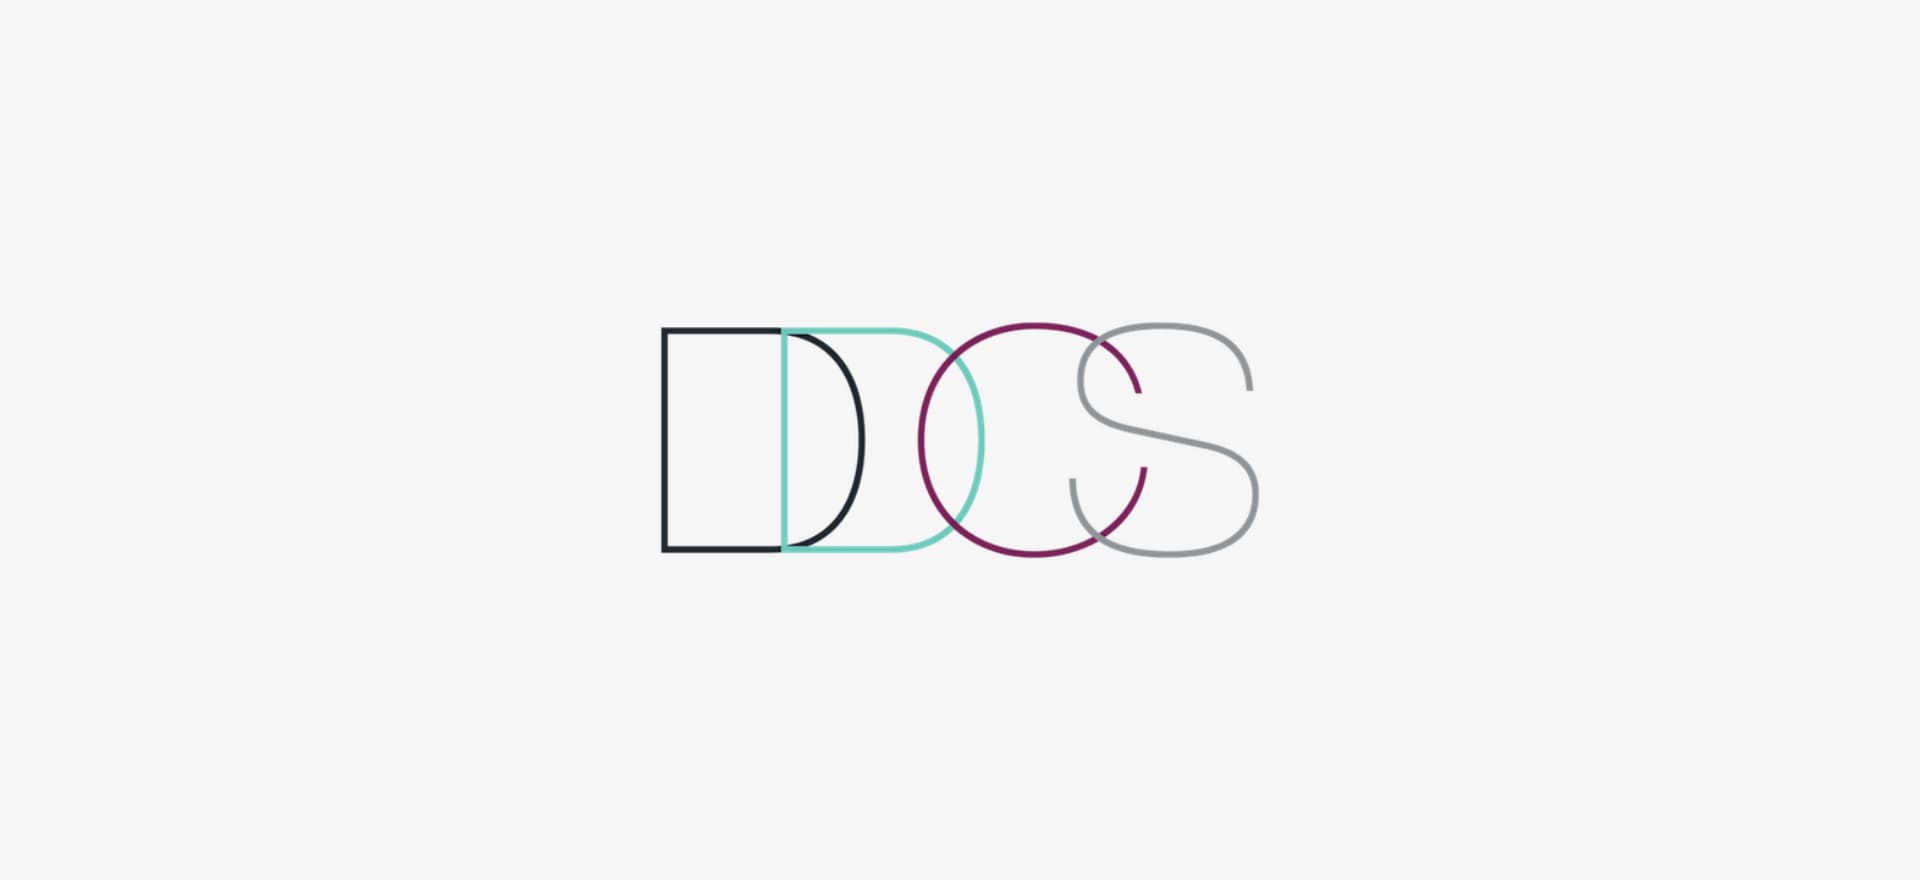 DDCS logo